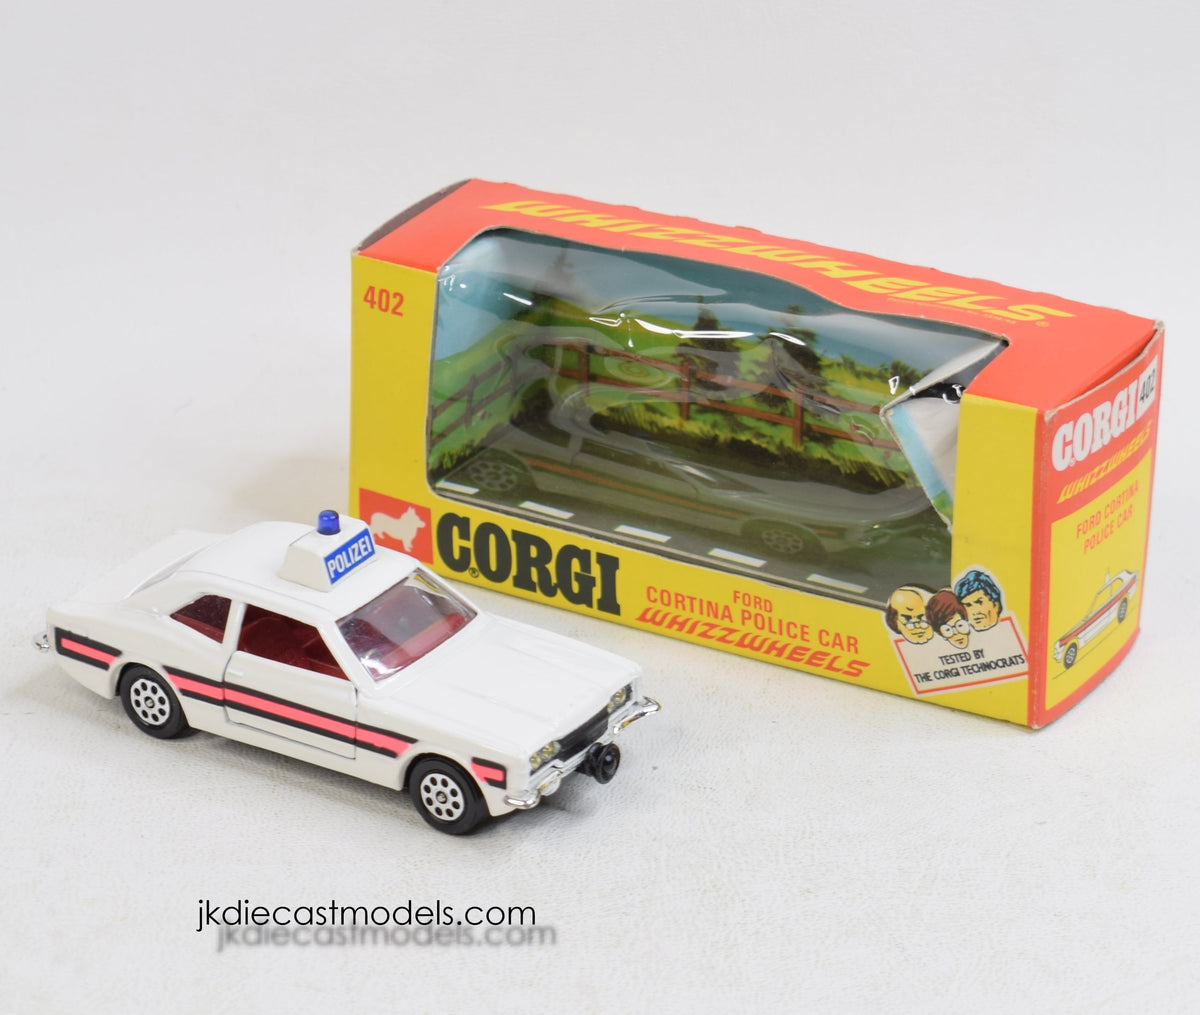 Corgi toys 402 Ford Cortina 'Polizei' Virtually Mint/Boxed 'Avonmore' Collection